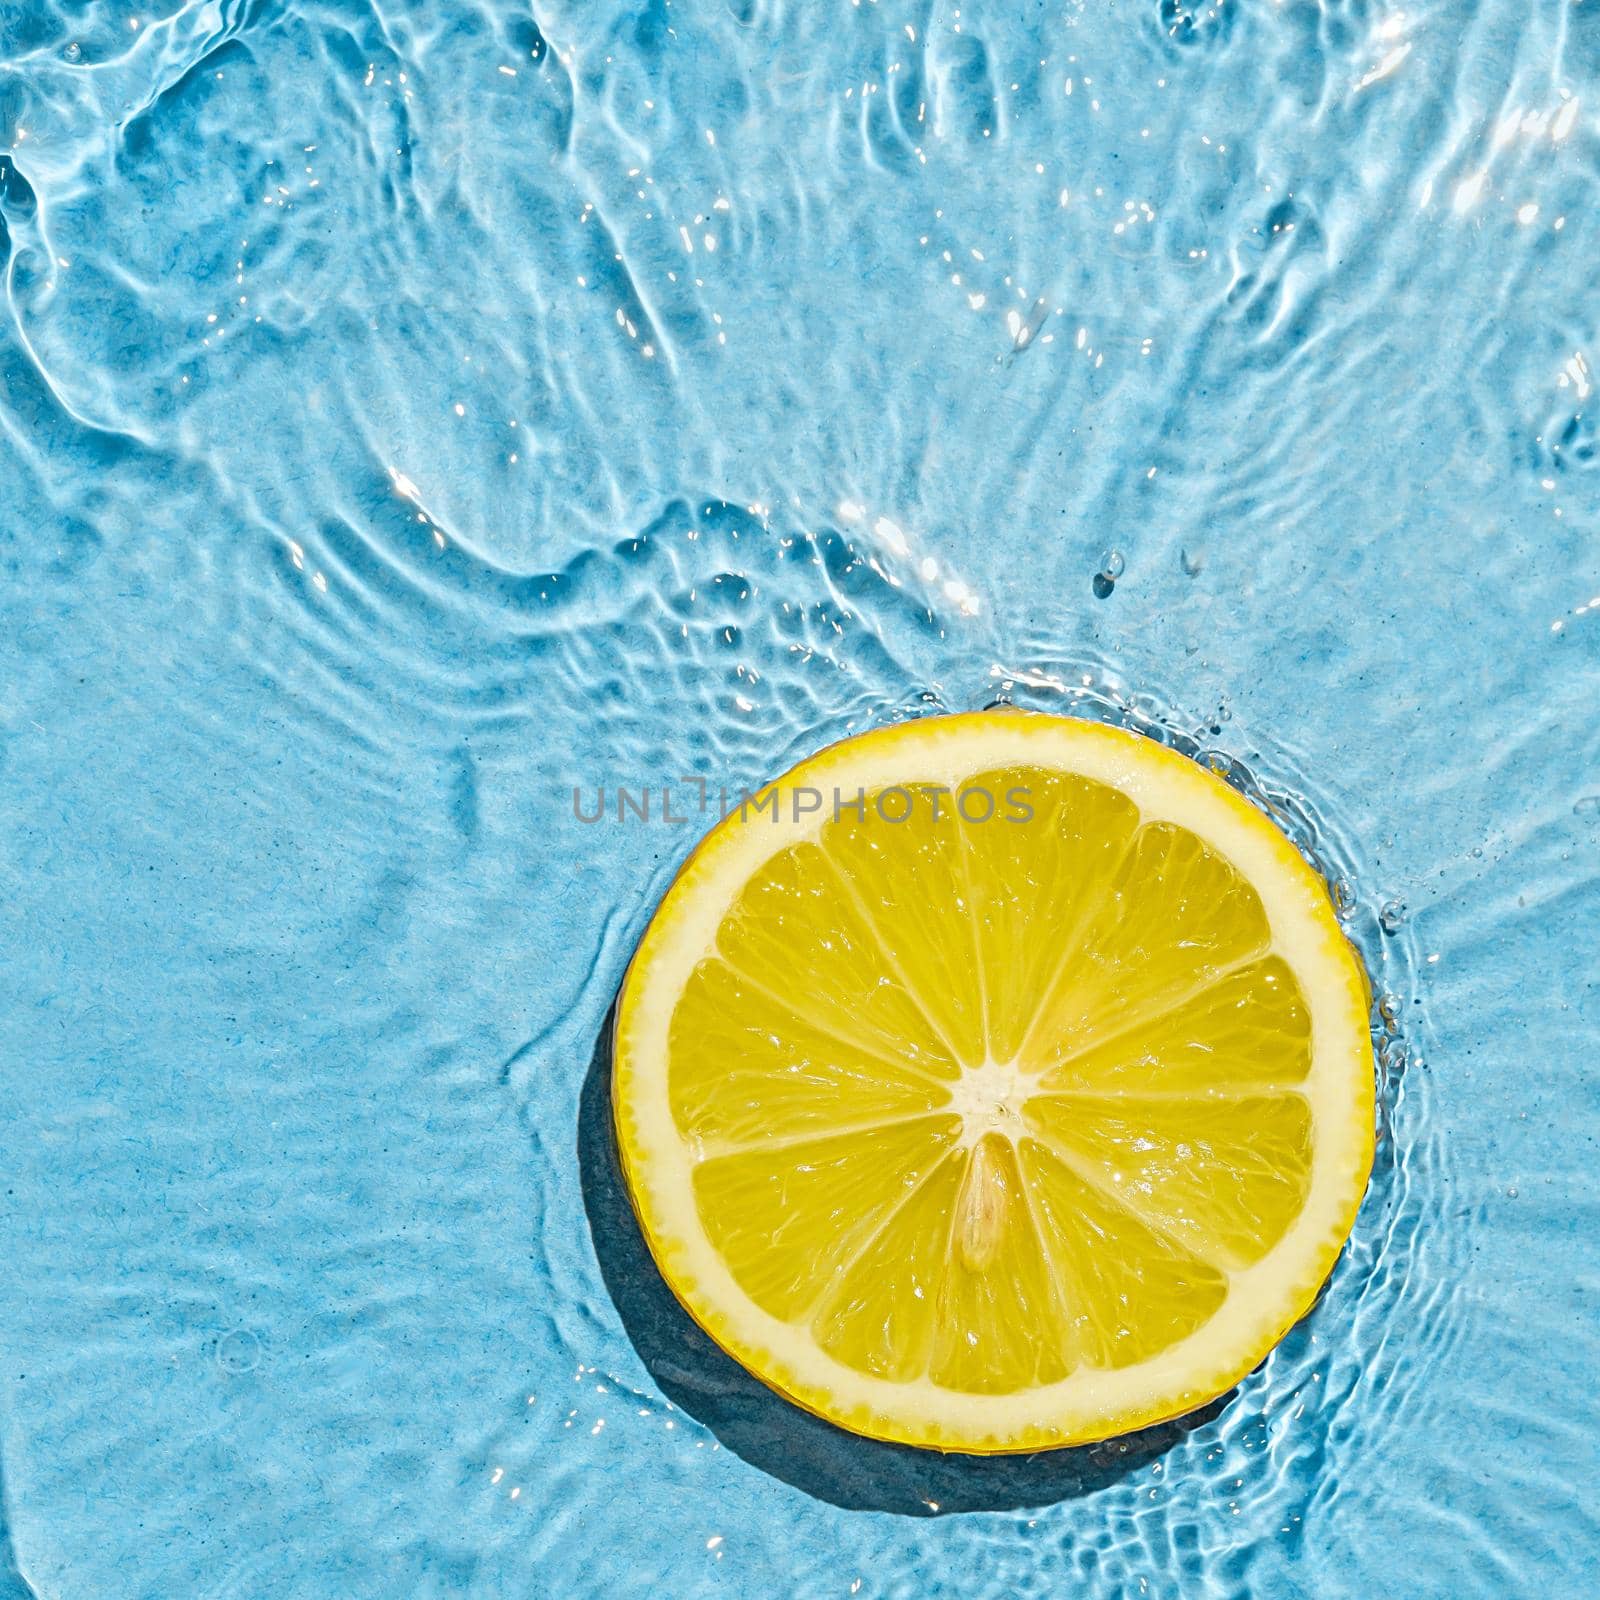 Tropics orange summer vegetarian bright juicy lemon in transparent summer blue water with wave motion.